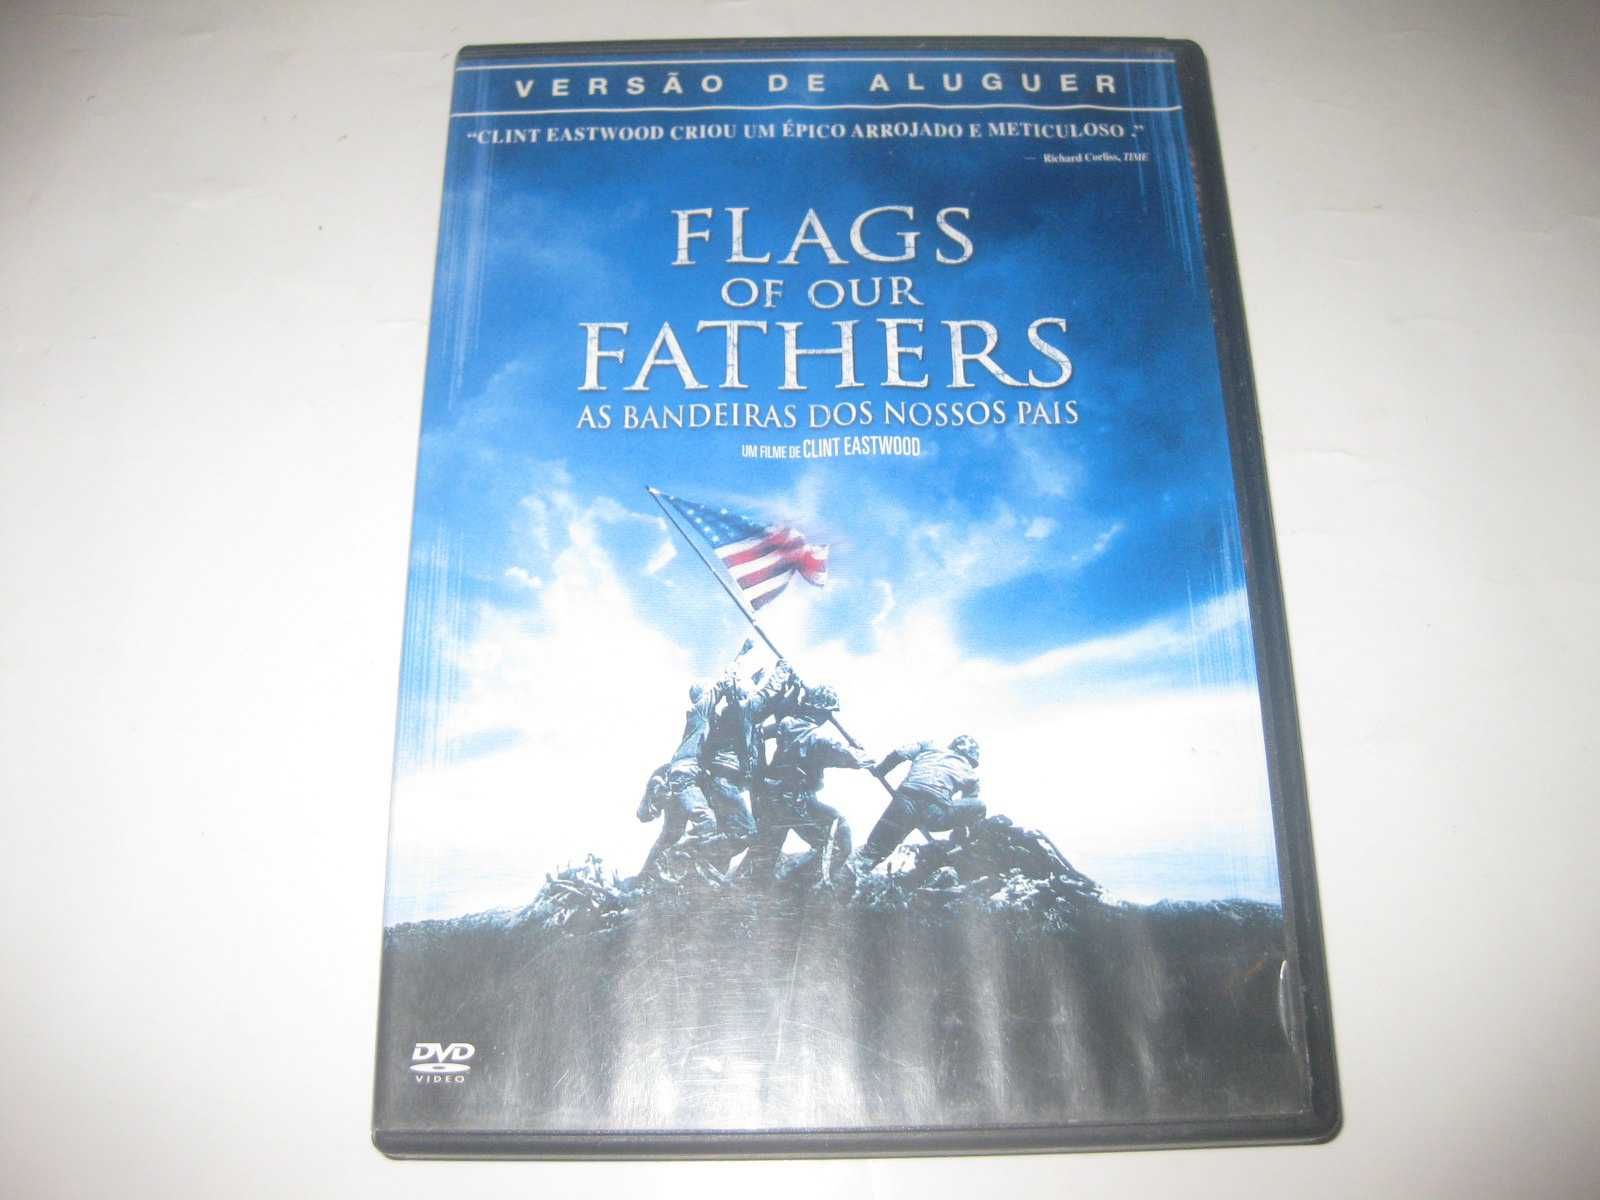 DVD "As Bandeiras dos Nossos Pais" de Clint Eastwood